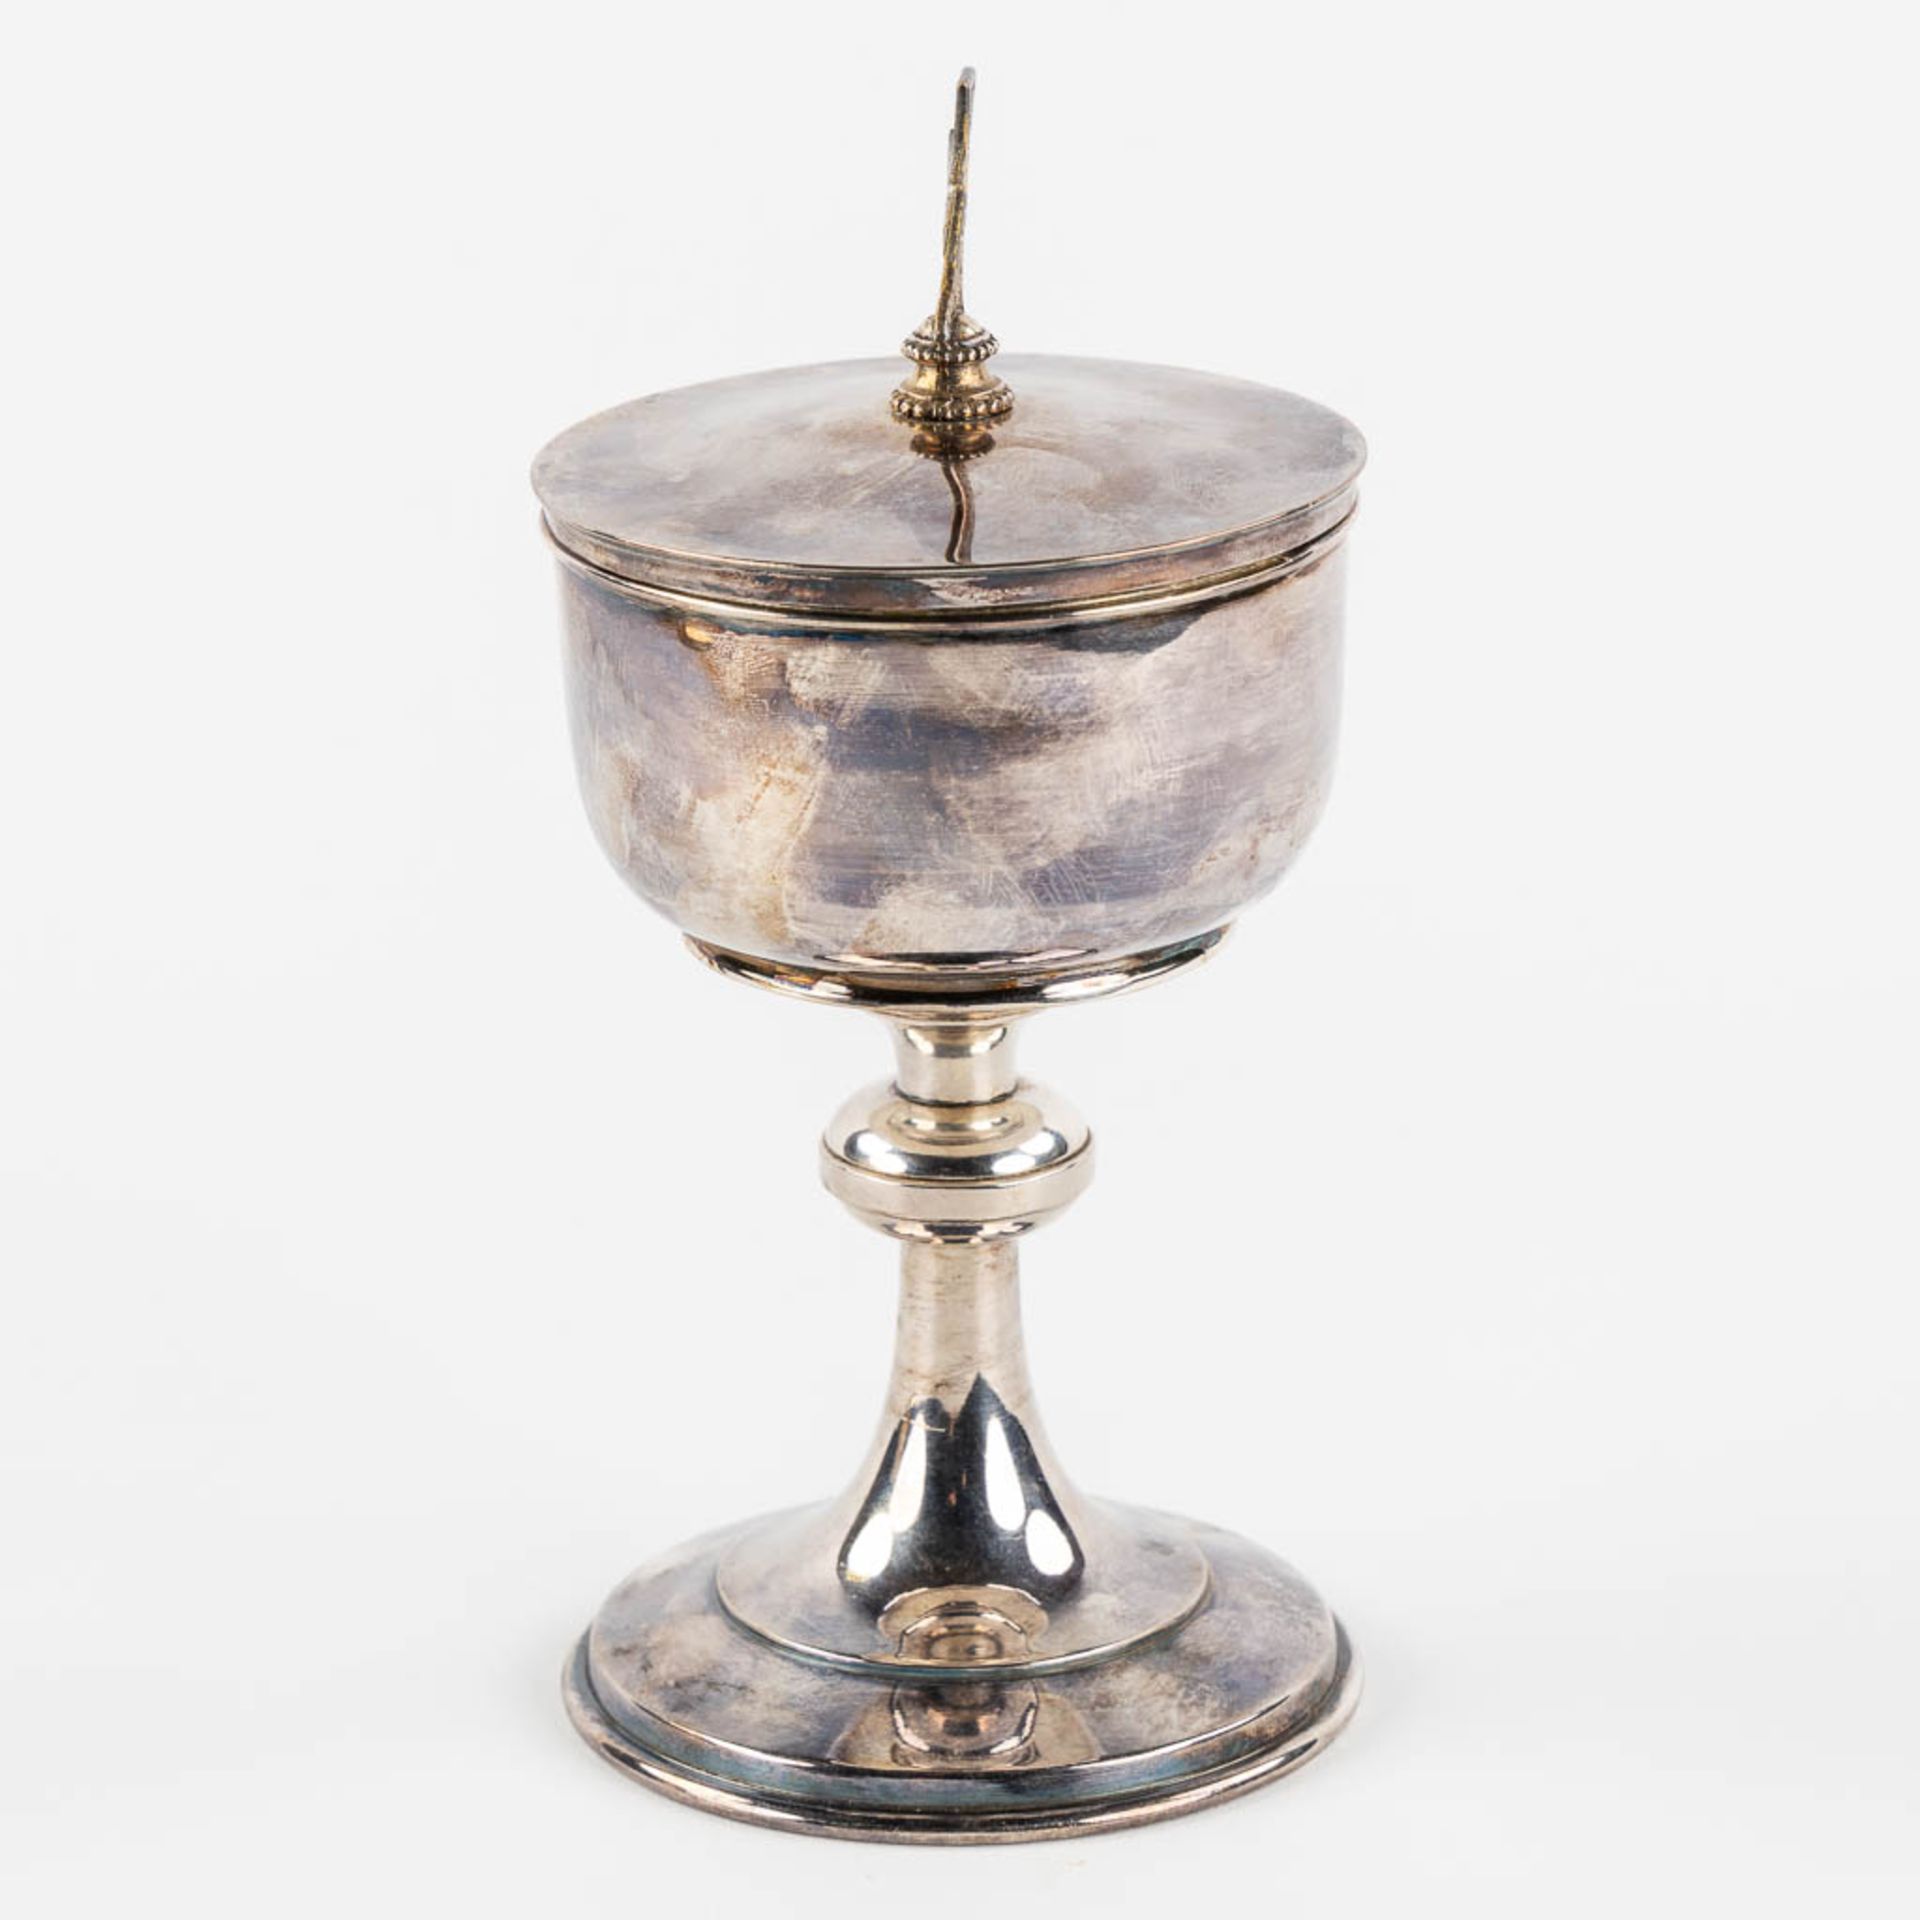 Carolus DE PAPE (1763-1840), A Ciboria, silver and silver-plated metal. Bruges, Belgium, 1832-1869. - Image 6 of 13